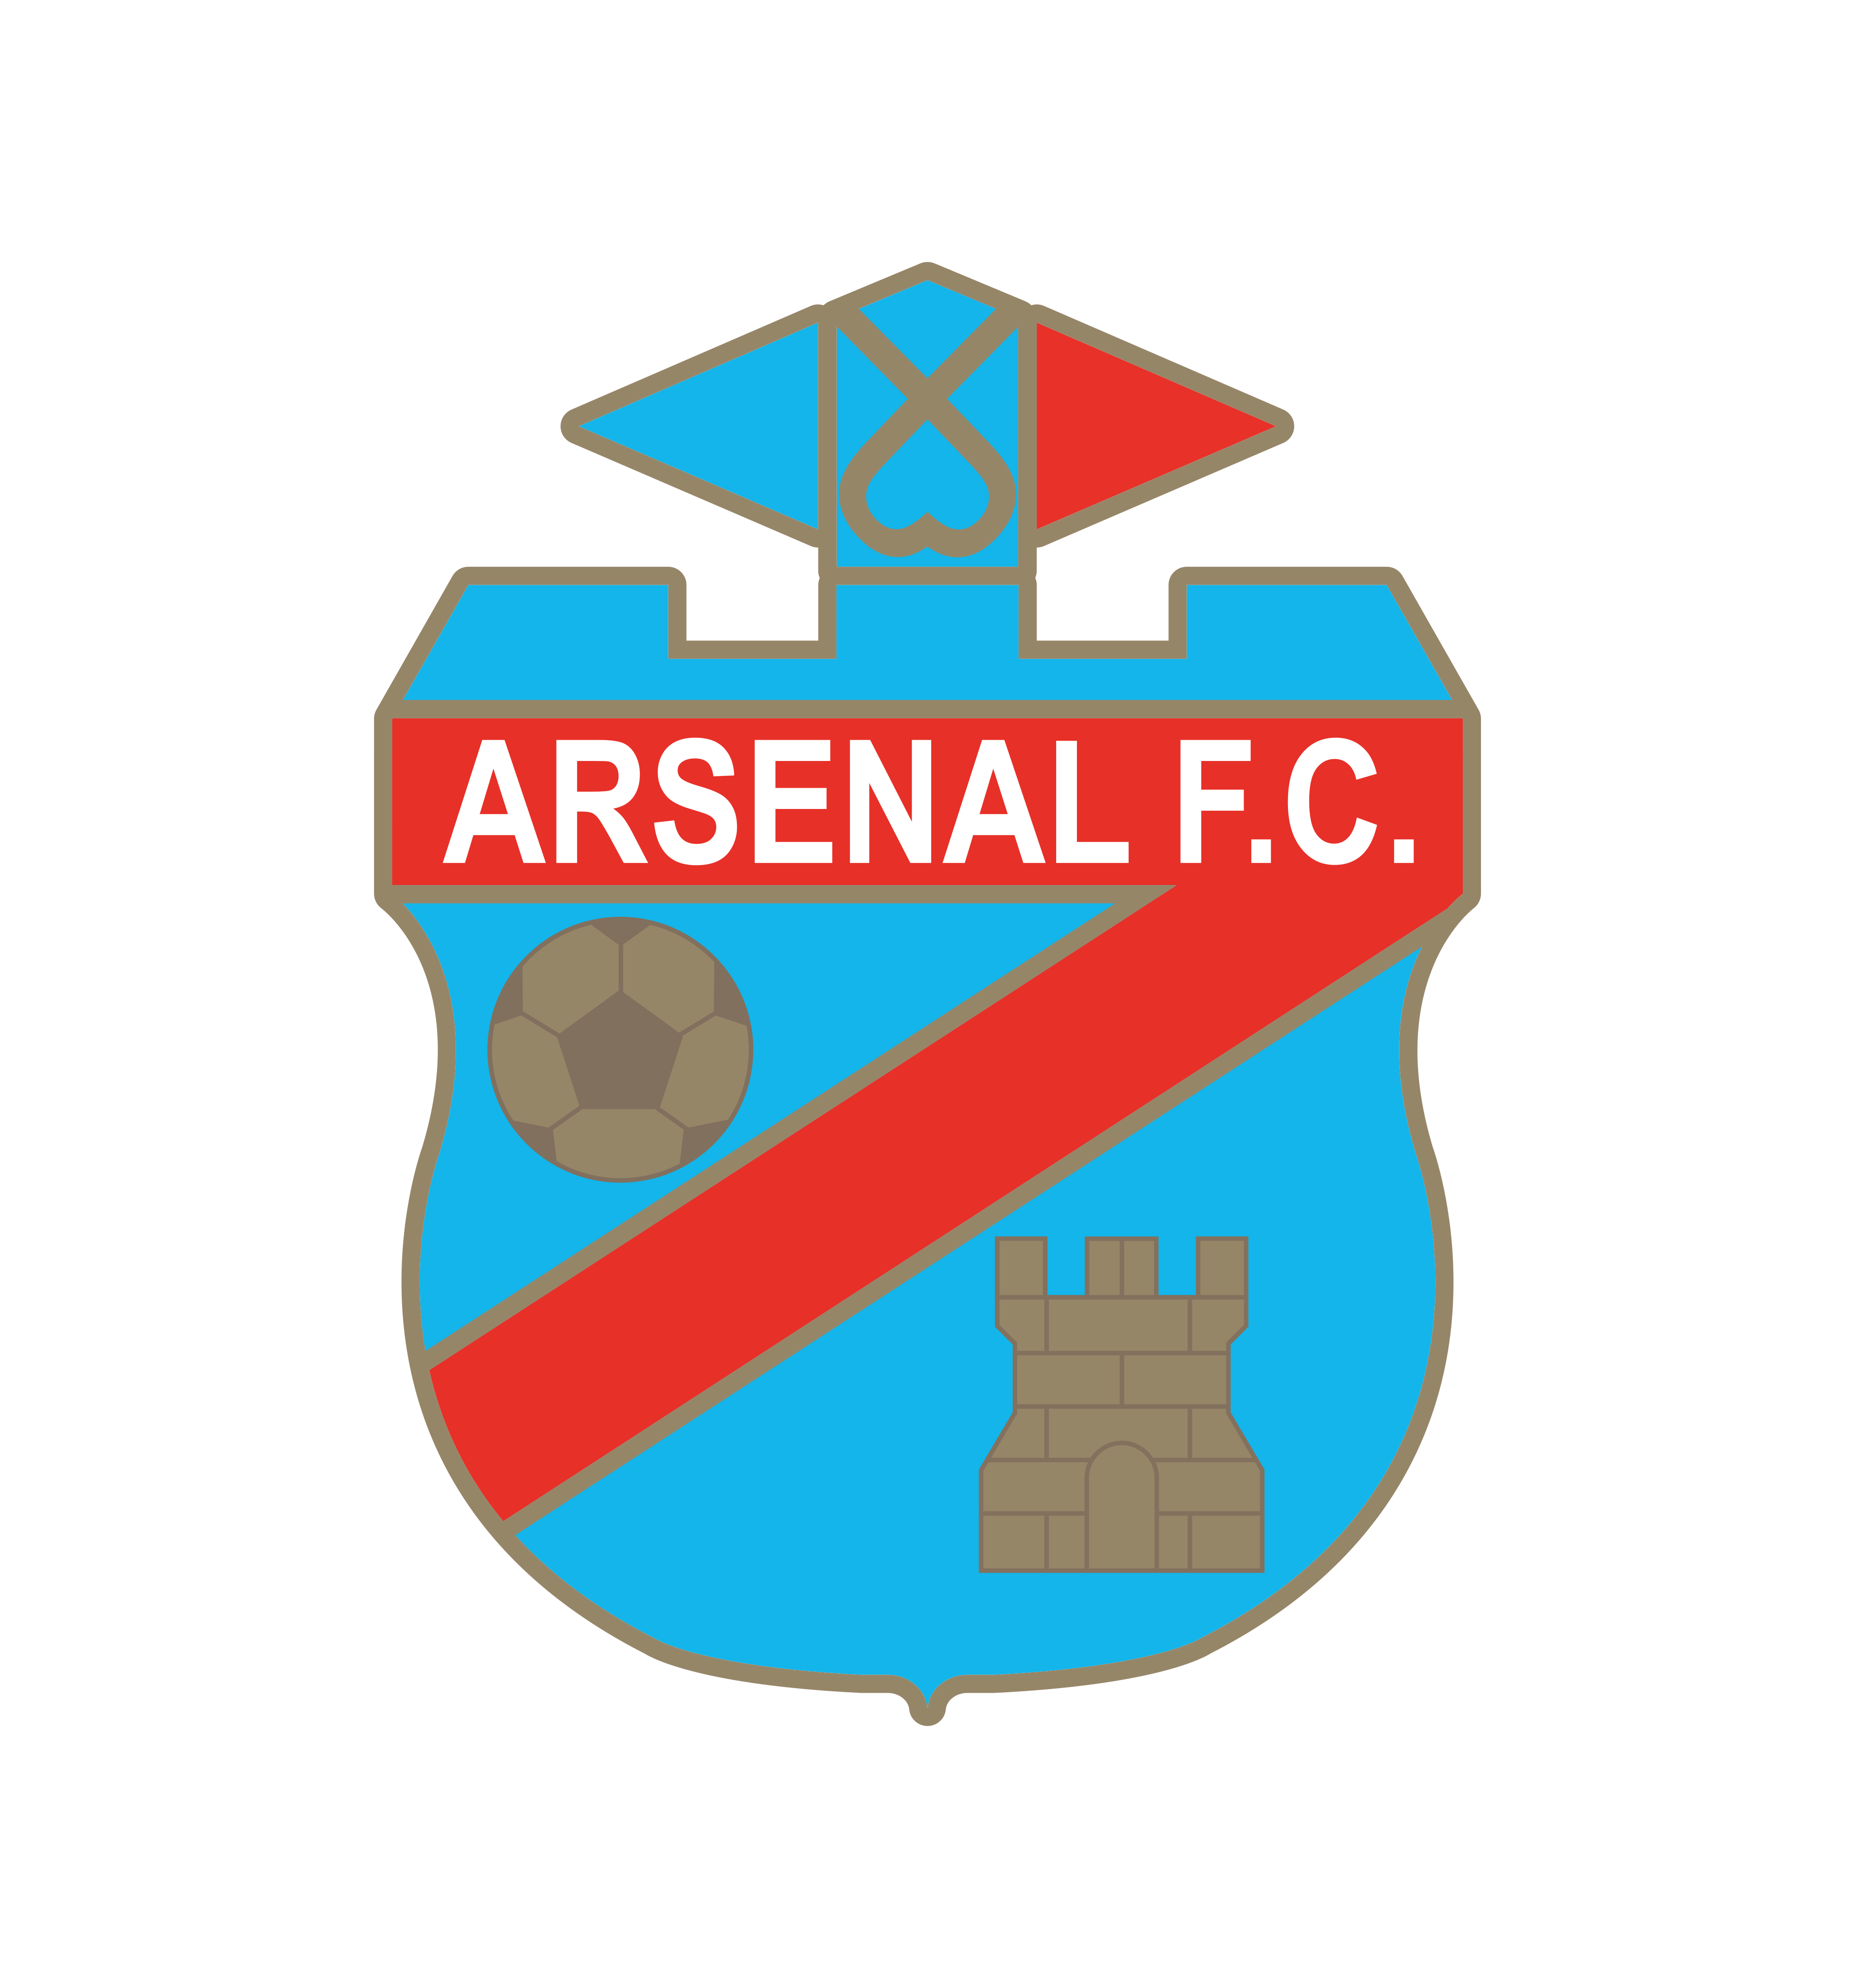 arsenal fc logo 0 - Arsenal FC Sarandí Logo